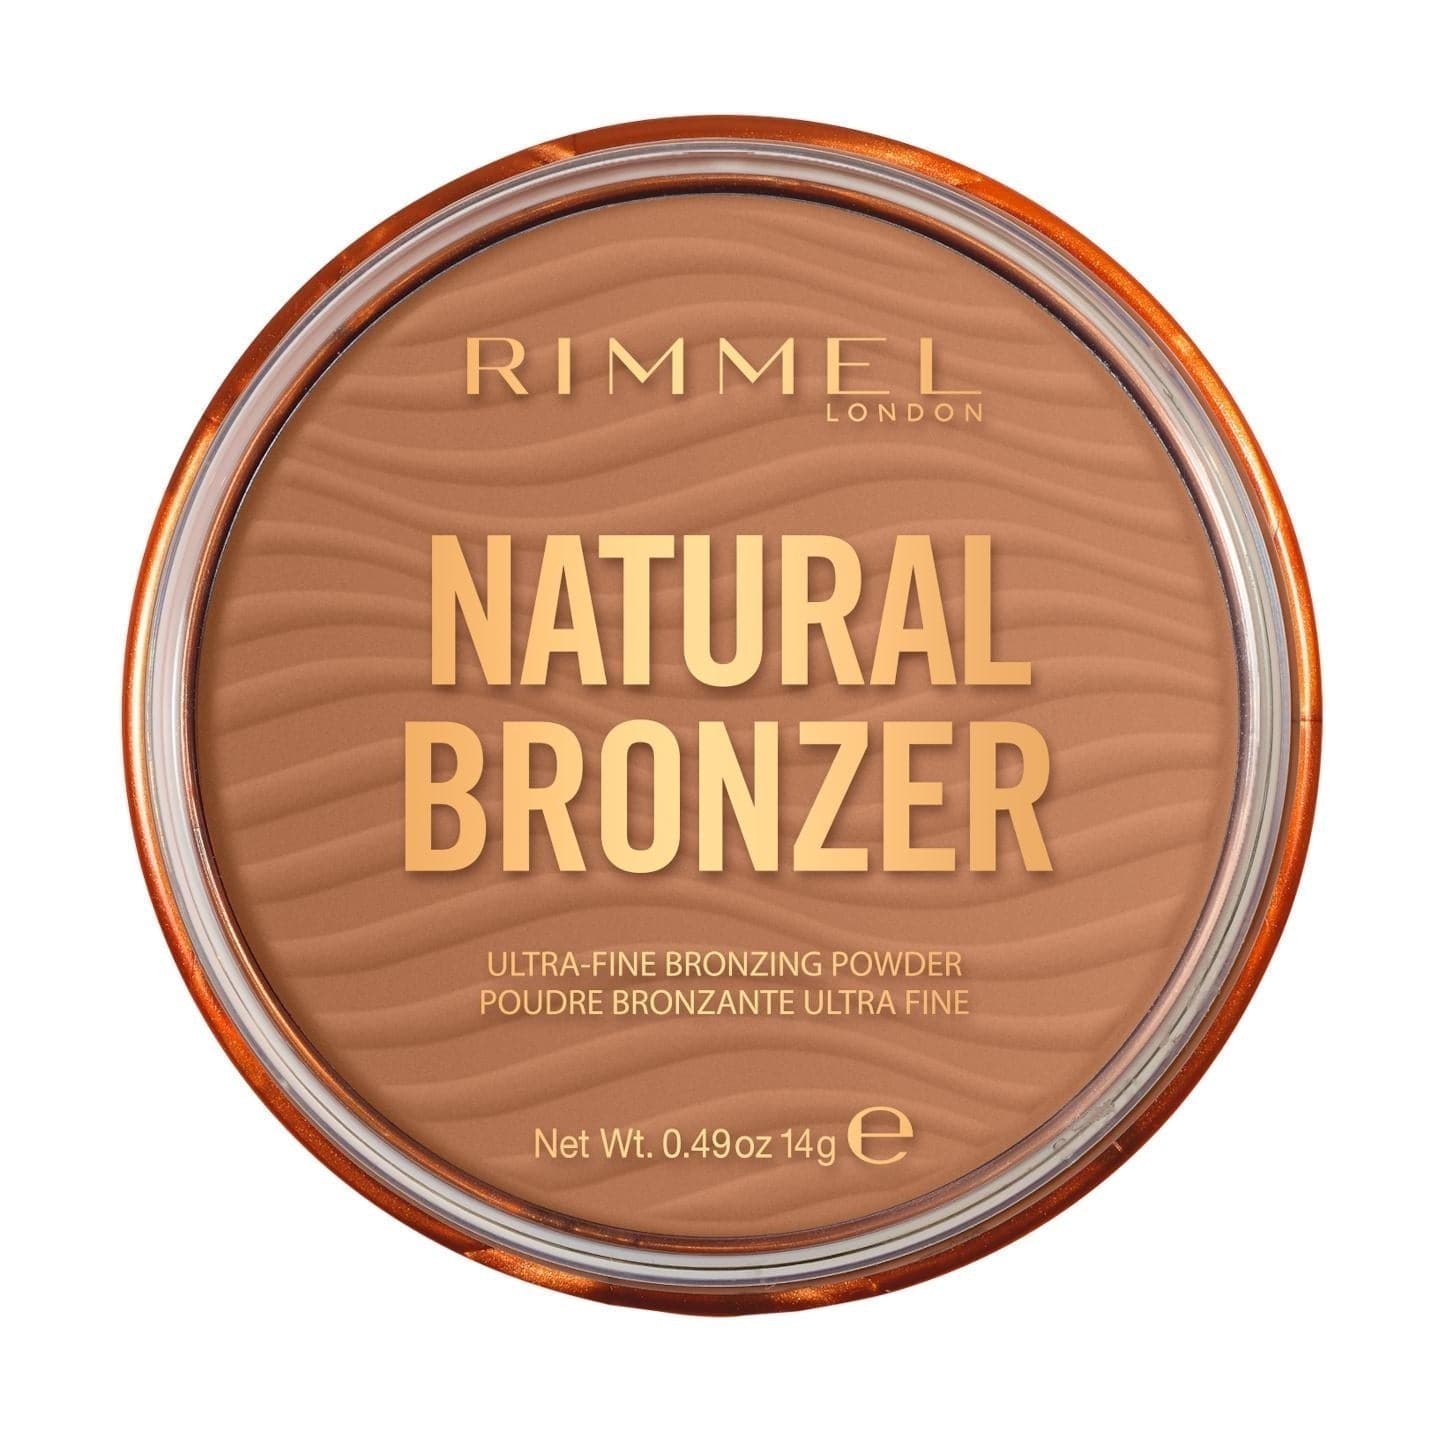 Rimmel London Natural Bronzer Restage - 002 Sunbronze - Premium Health & Beauty from Rimmel London - Just Rs 2140! Shop now at Cozmetica